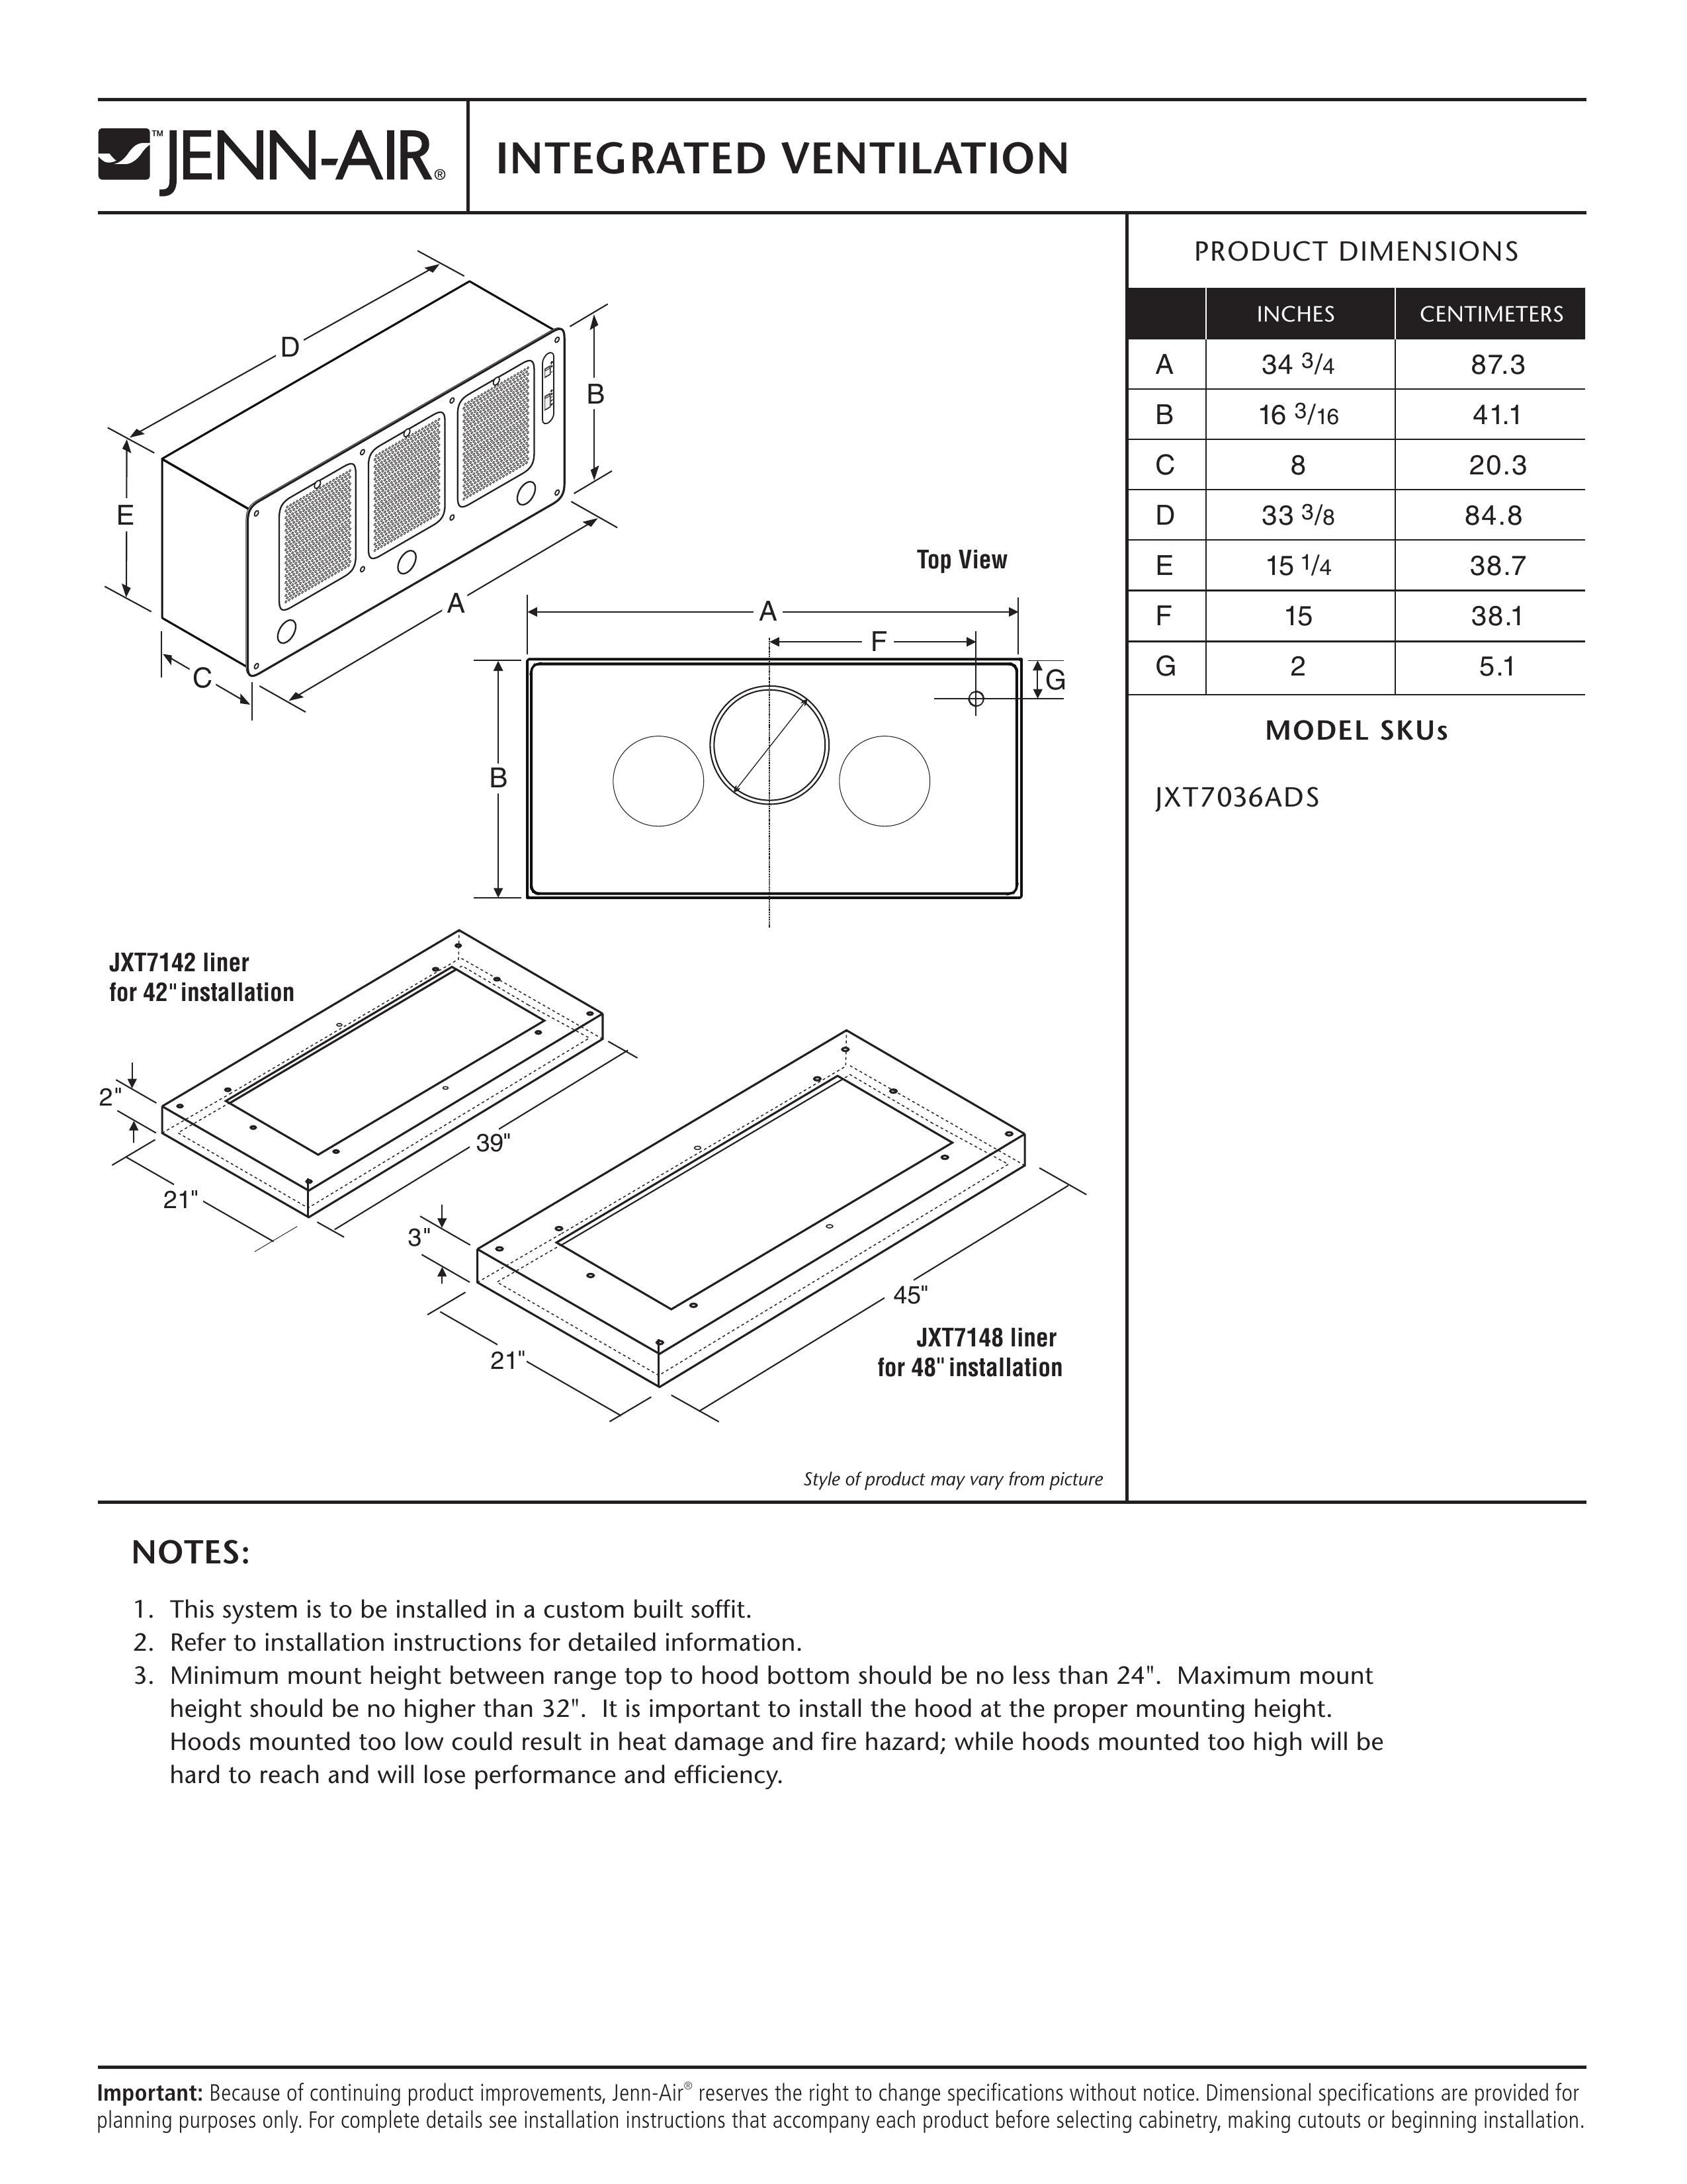 Jenn-Air JXT7142 Ventilation Hood User Manual